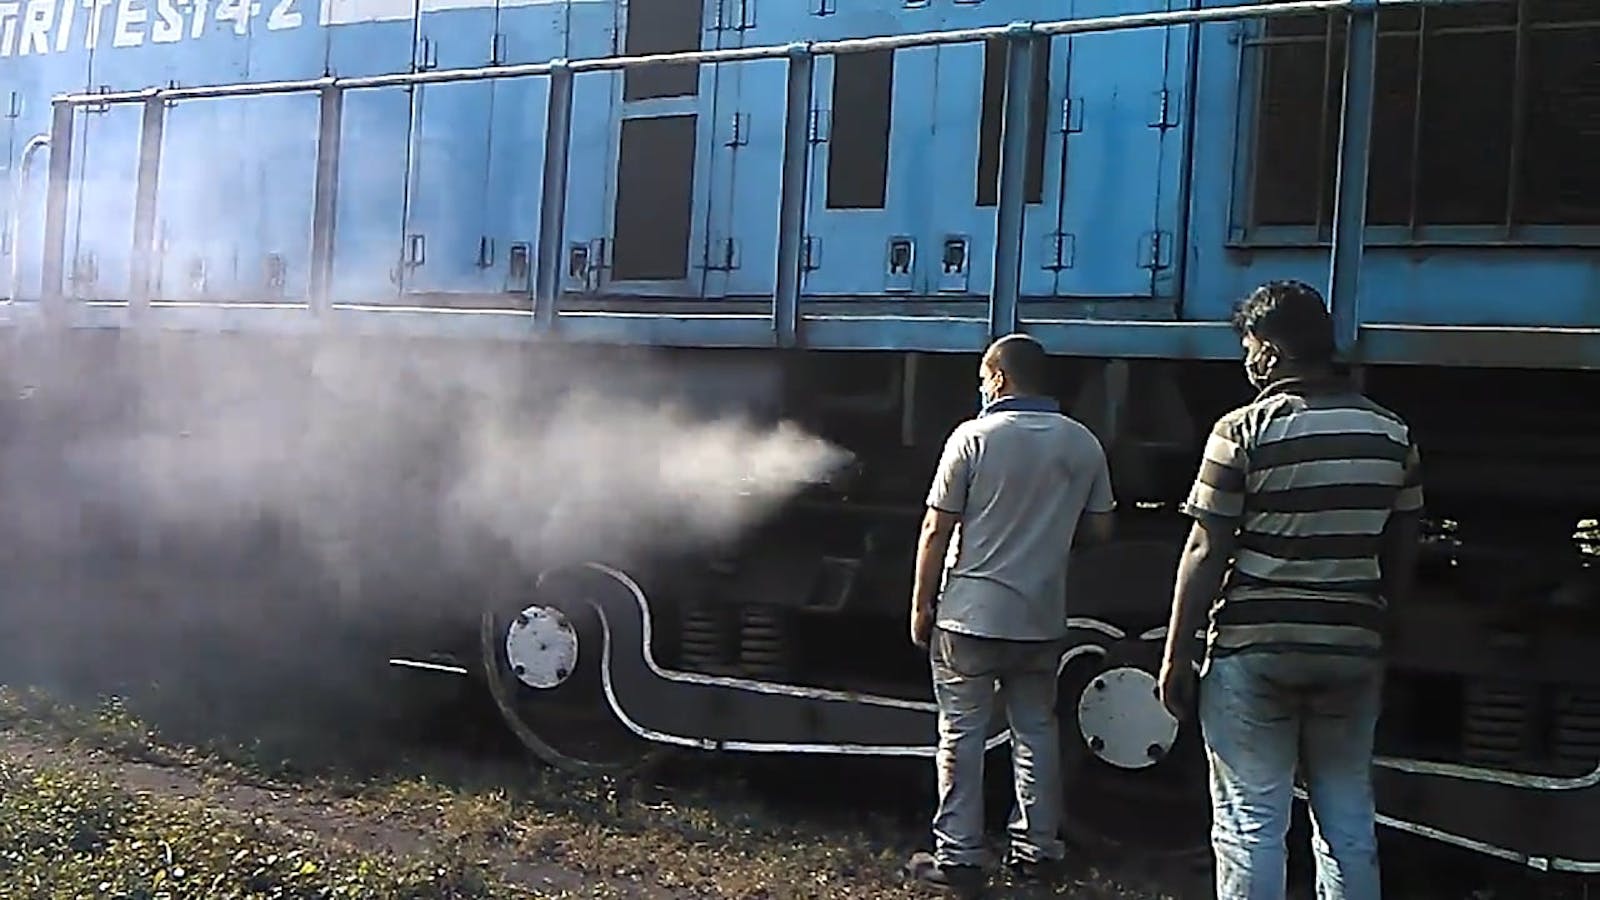 locomotive-engineer-training-program-videos-download-the-best-free-4k-stock-video-footage